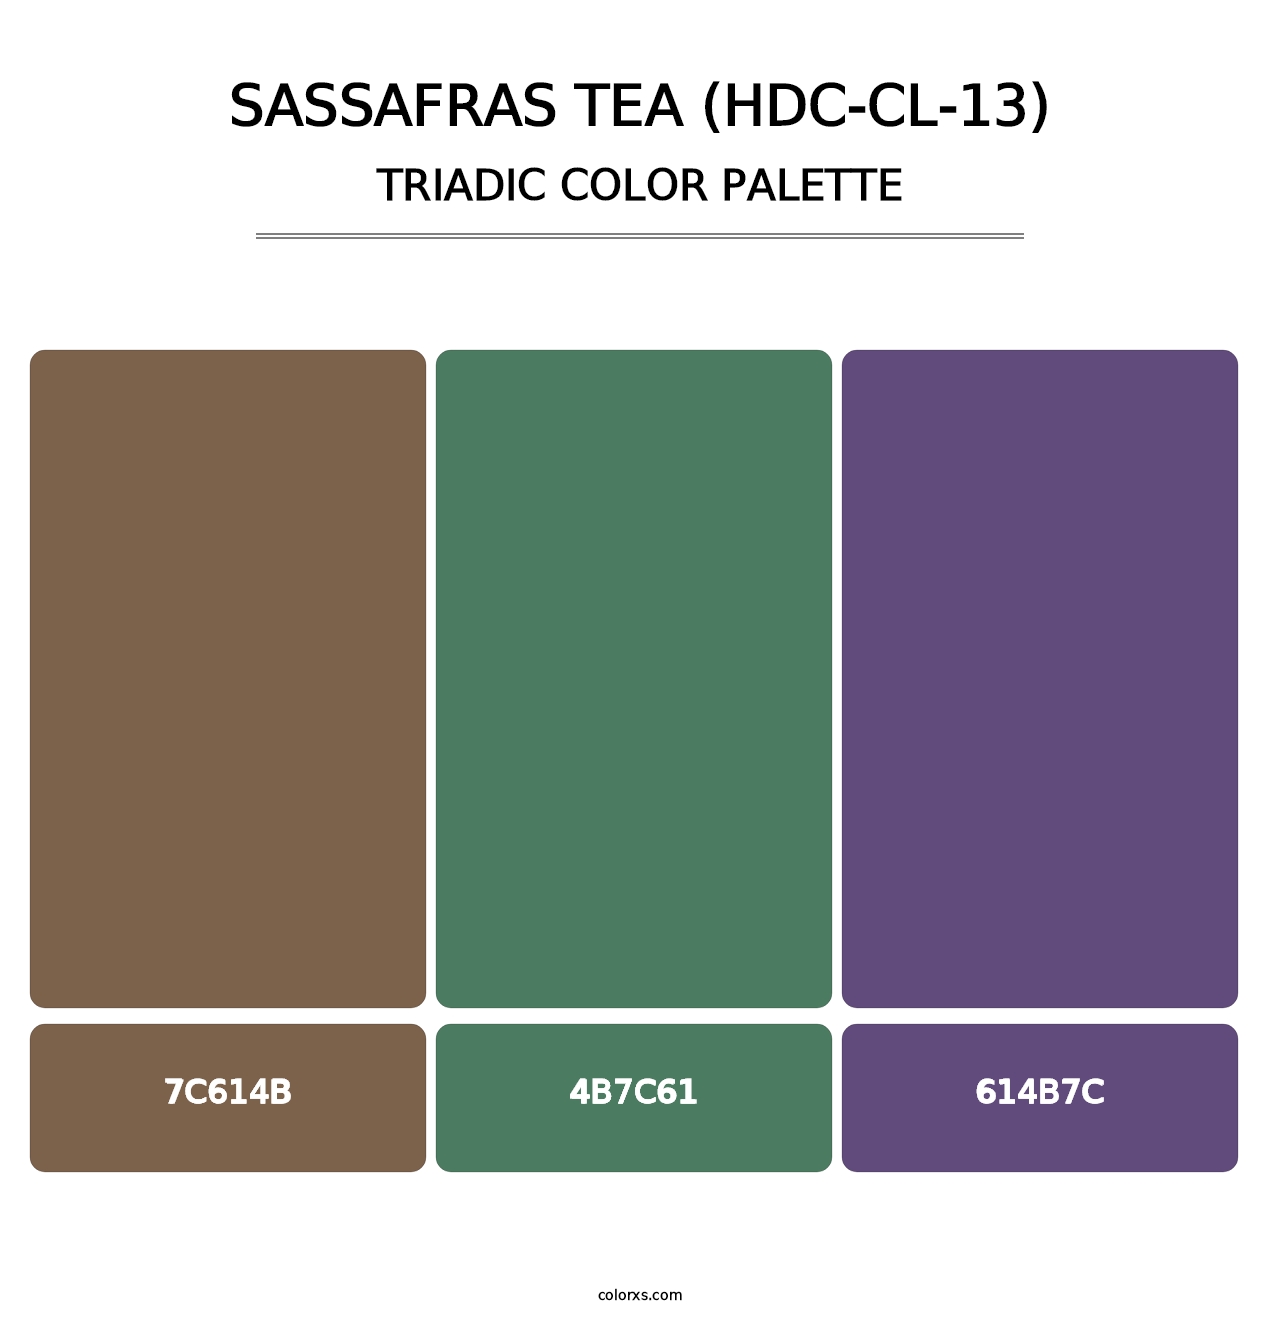 Sassafras Tea (HDC-CL-13) - Triadic Color Palette